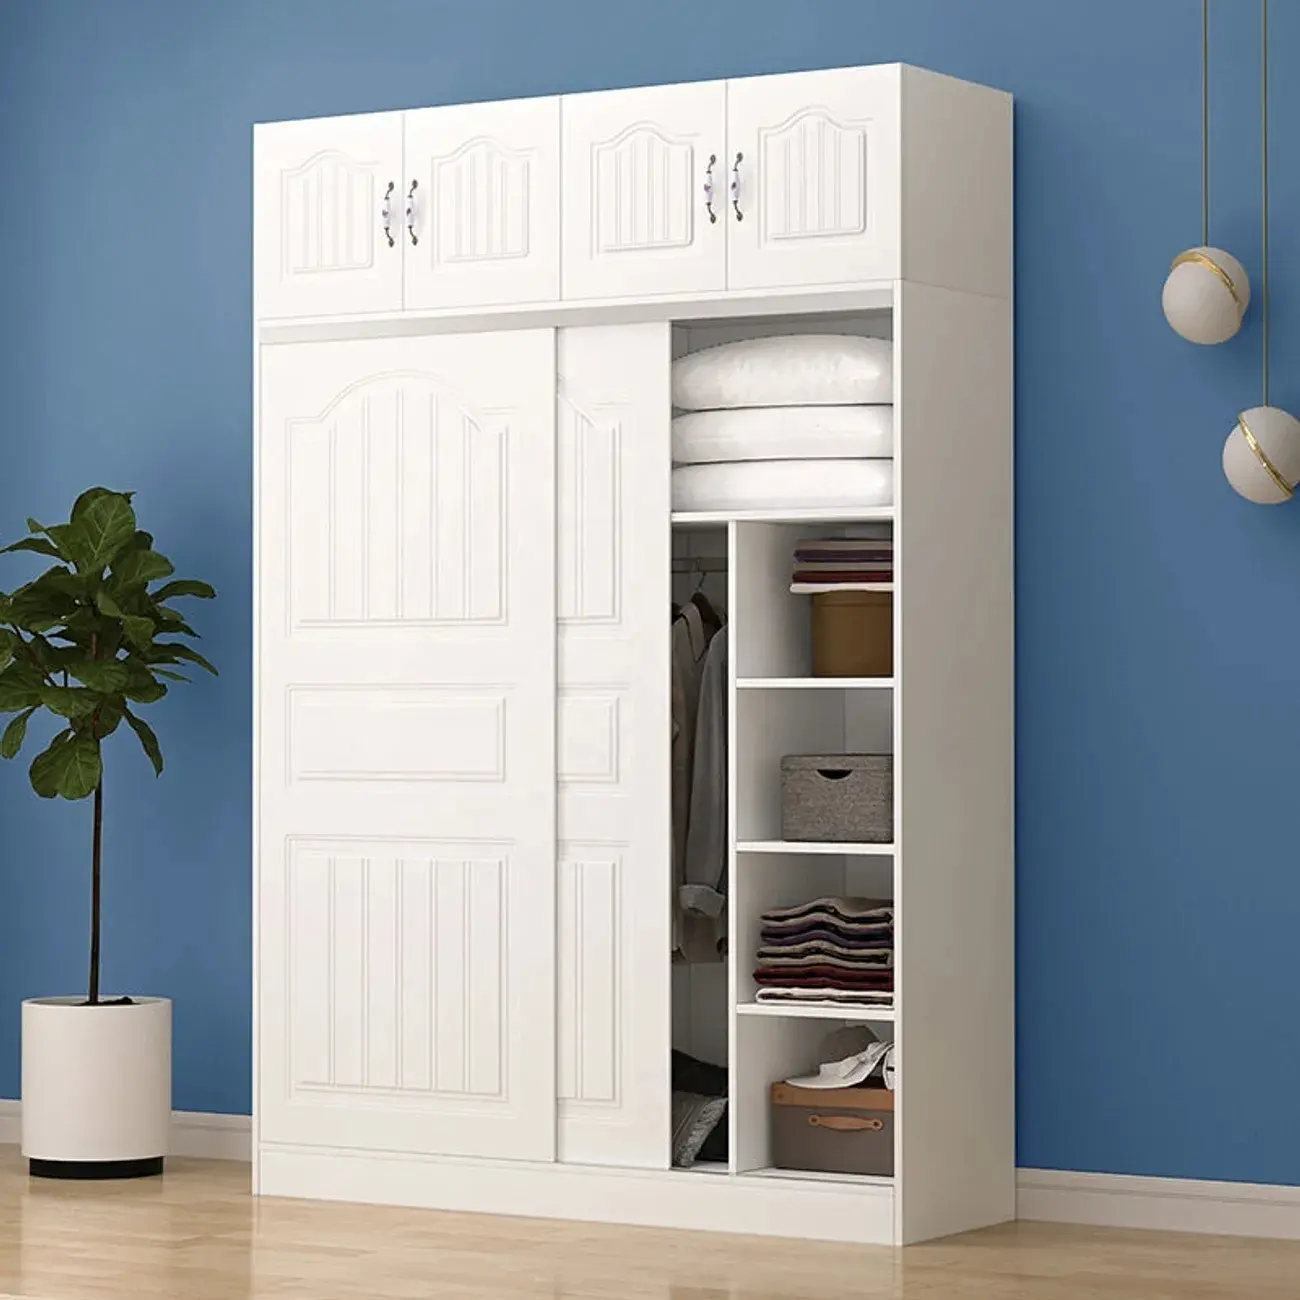 Modern walldrope storage sliding door wall corner tall wardrobe and cabinet design colour combination for bedroom luxury closet